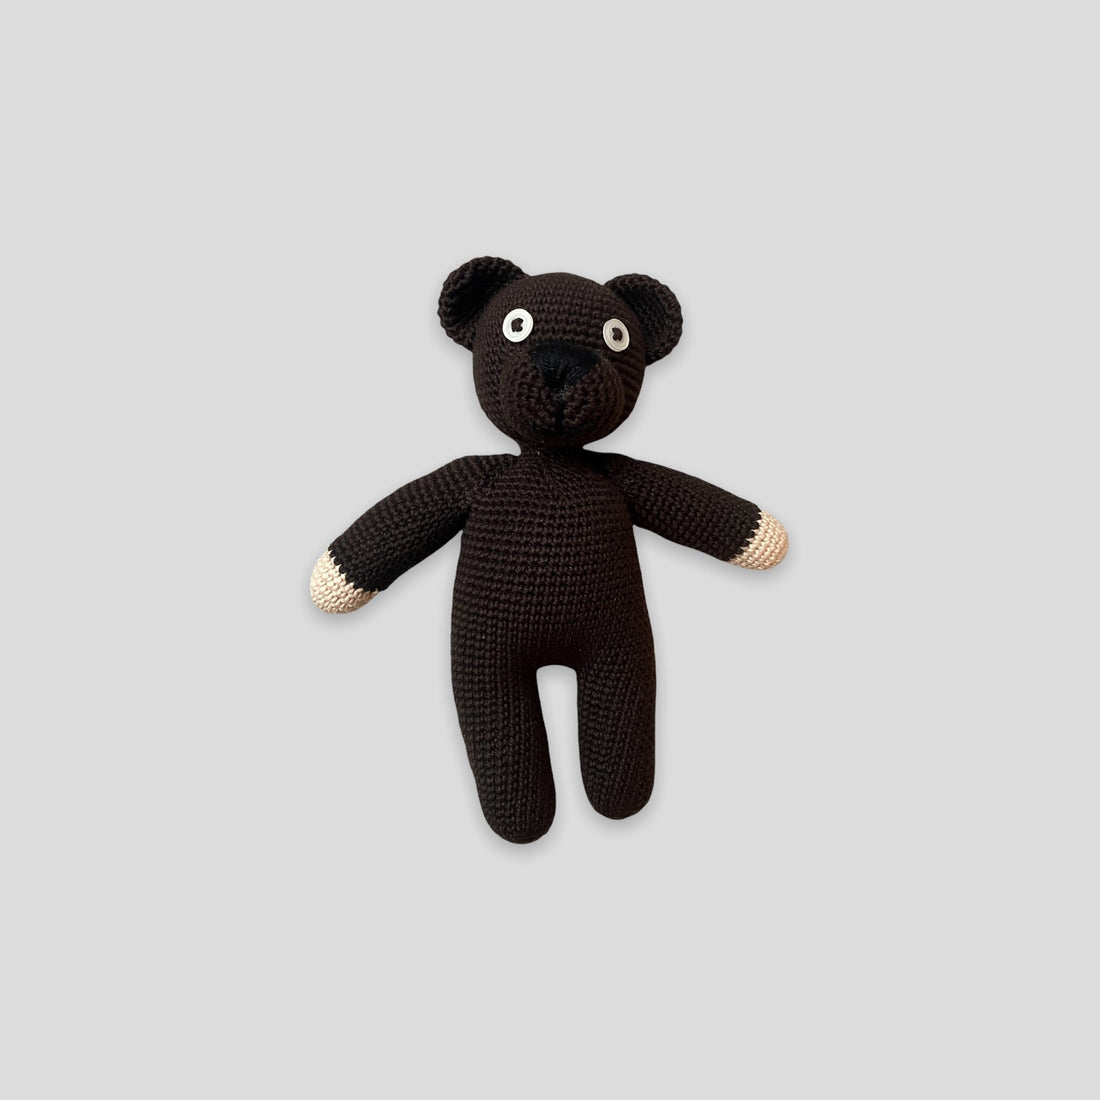 Crochet teddy bear